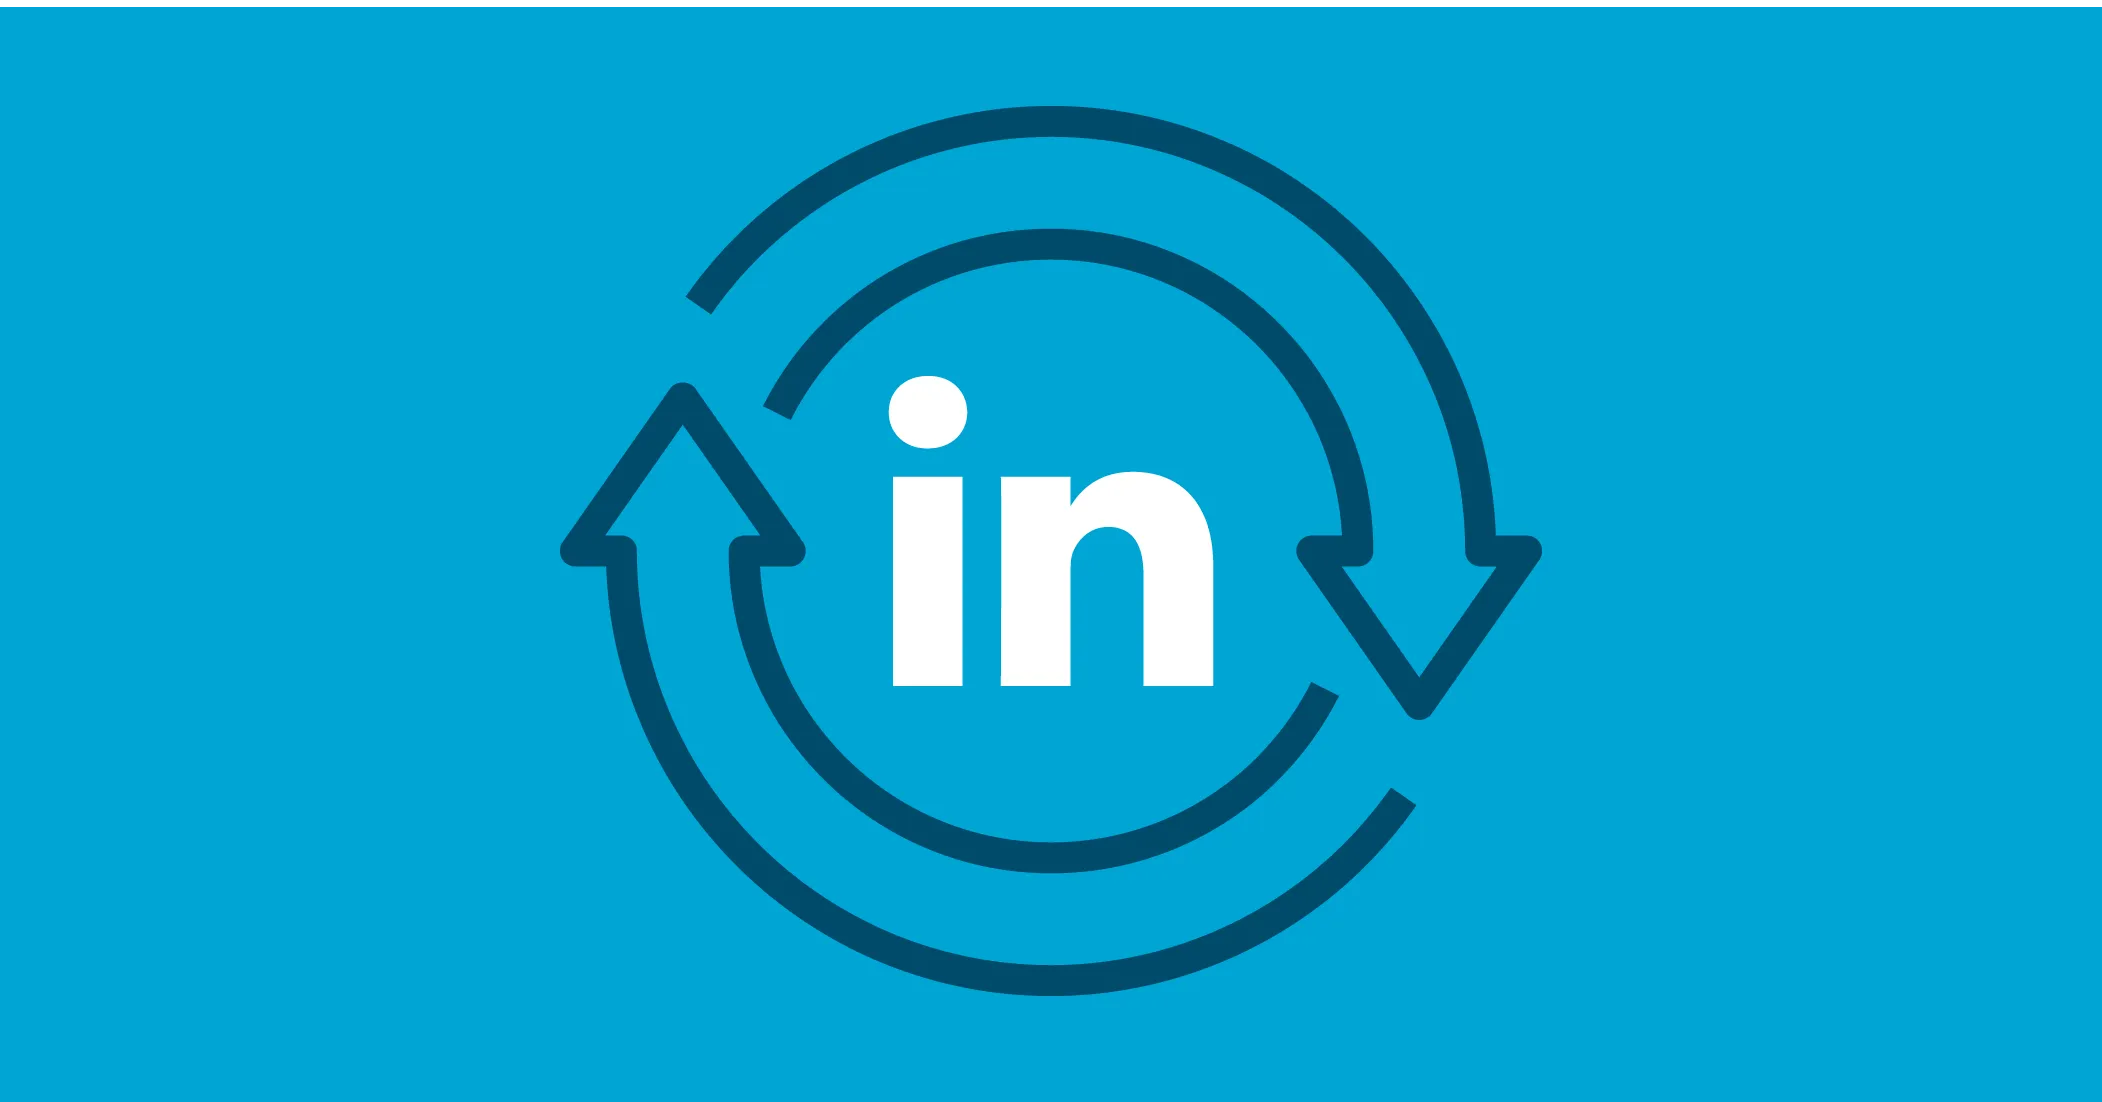 11. Update your LinkedIn profile 